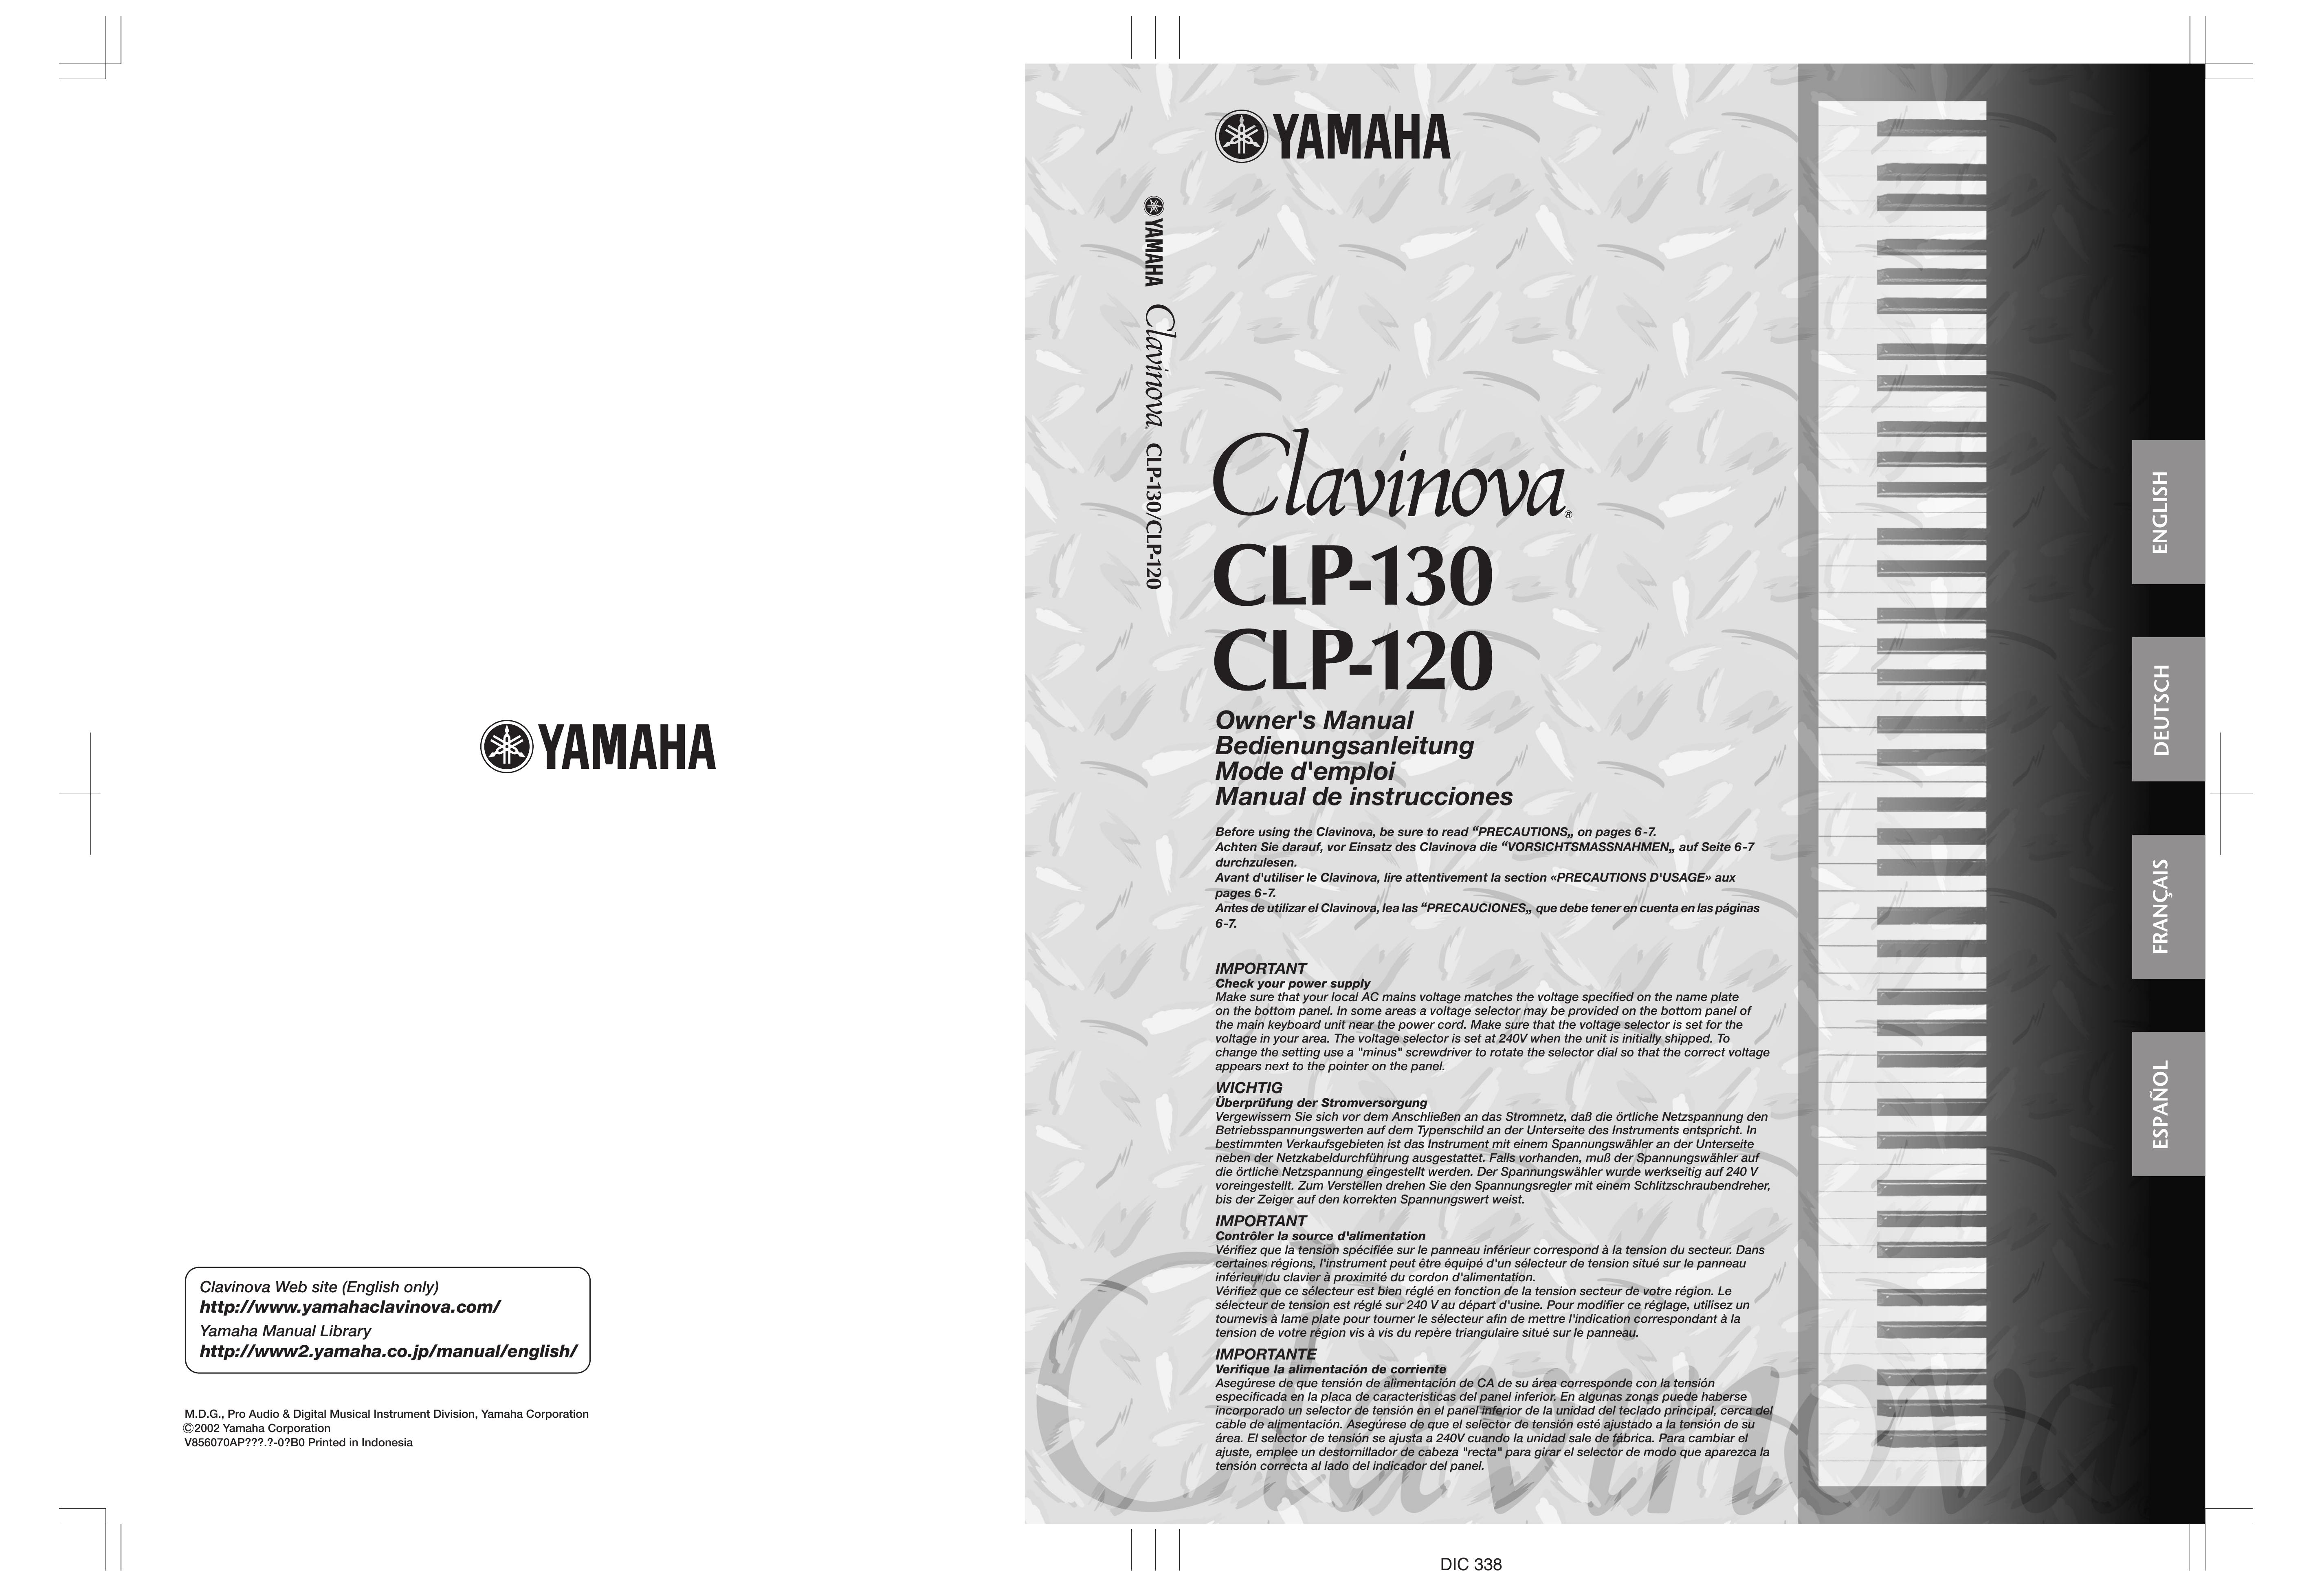 Navman CLP-120 Electronic Keyboard User Manual